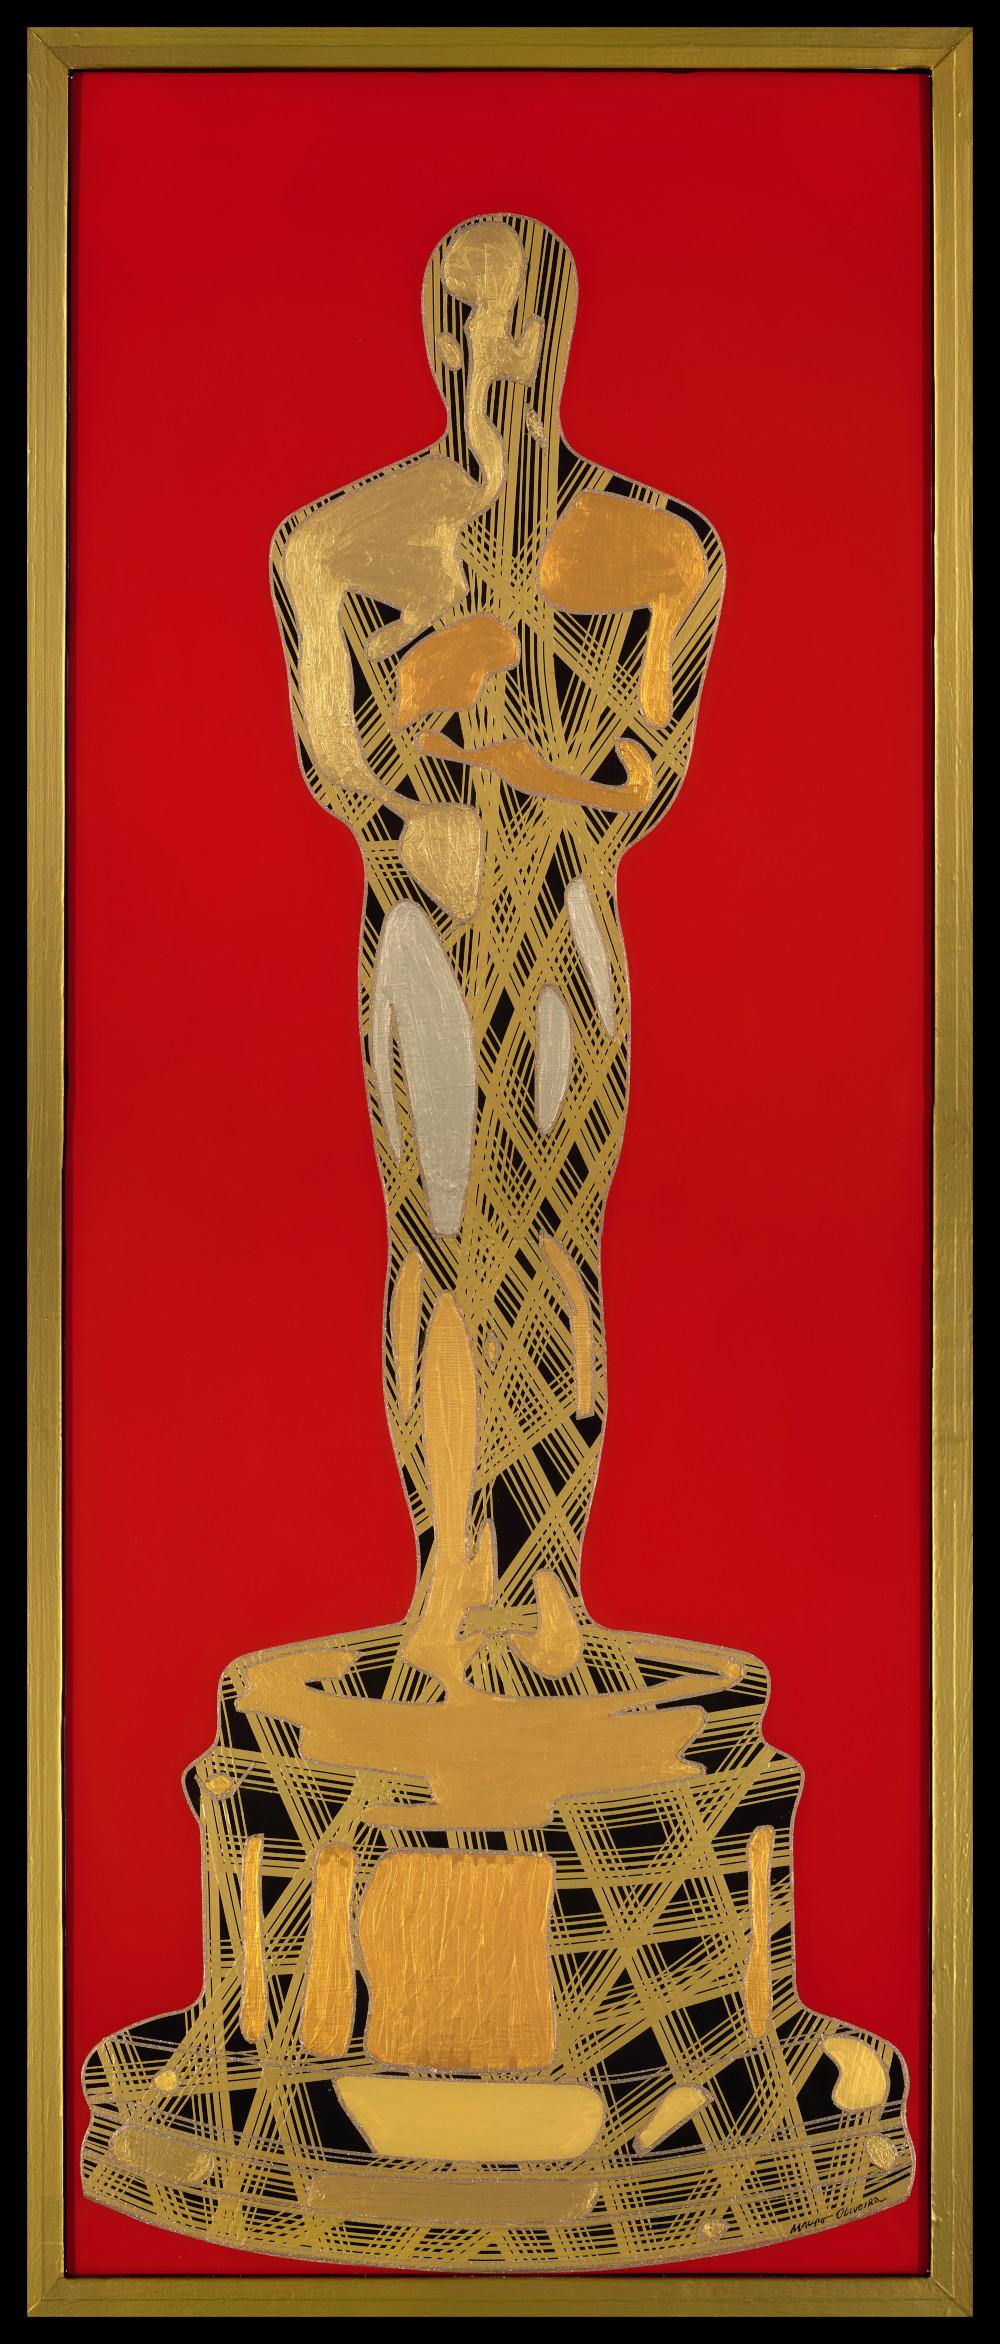 Mauro Oliveira Figurative Print - Red Carpet Oscar (Limited Edition Print)